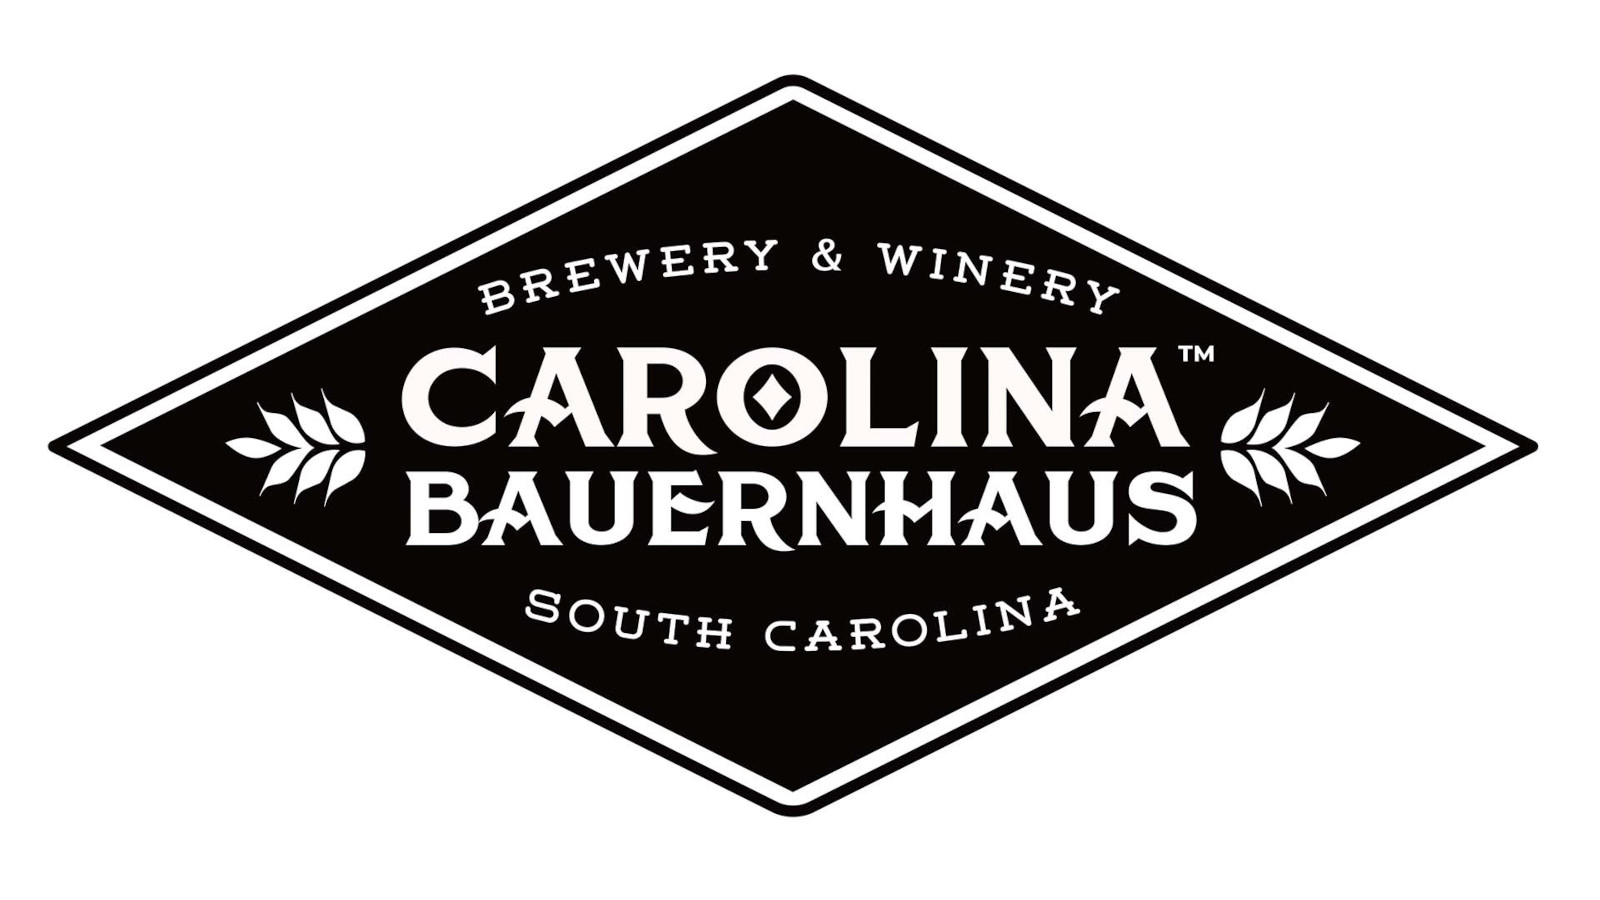 Carolina Bauernhaus Brewery & Winery $100 Gift Card US, 56.5$